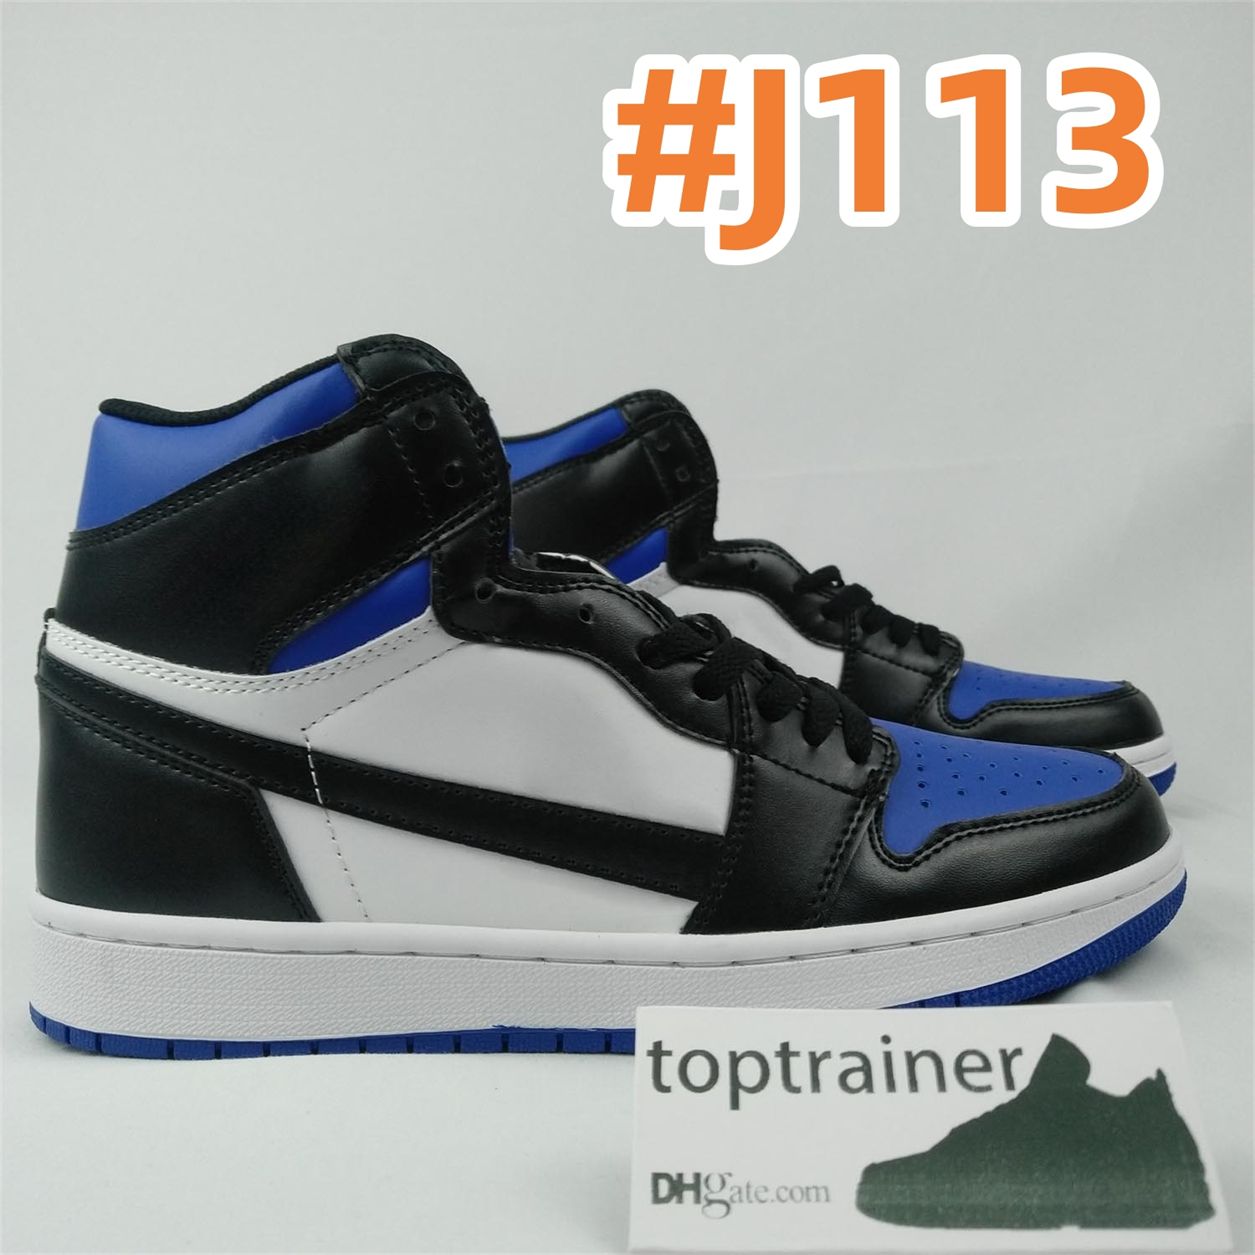 #J113